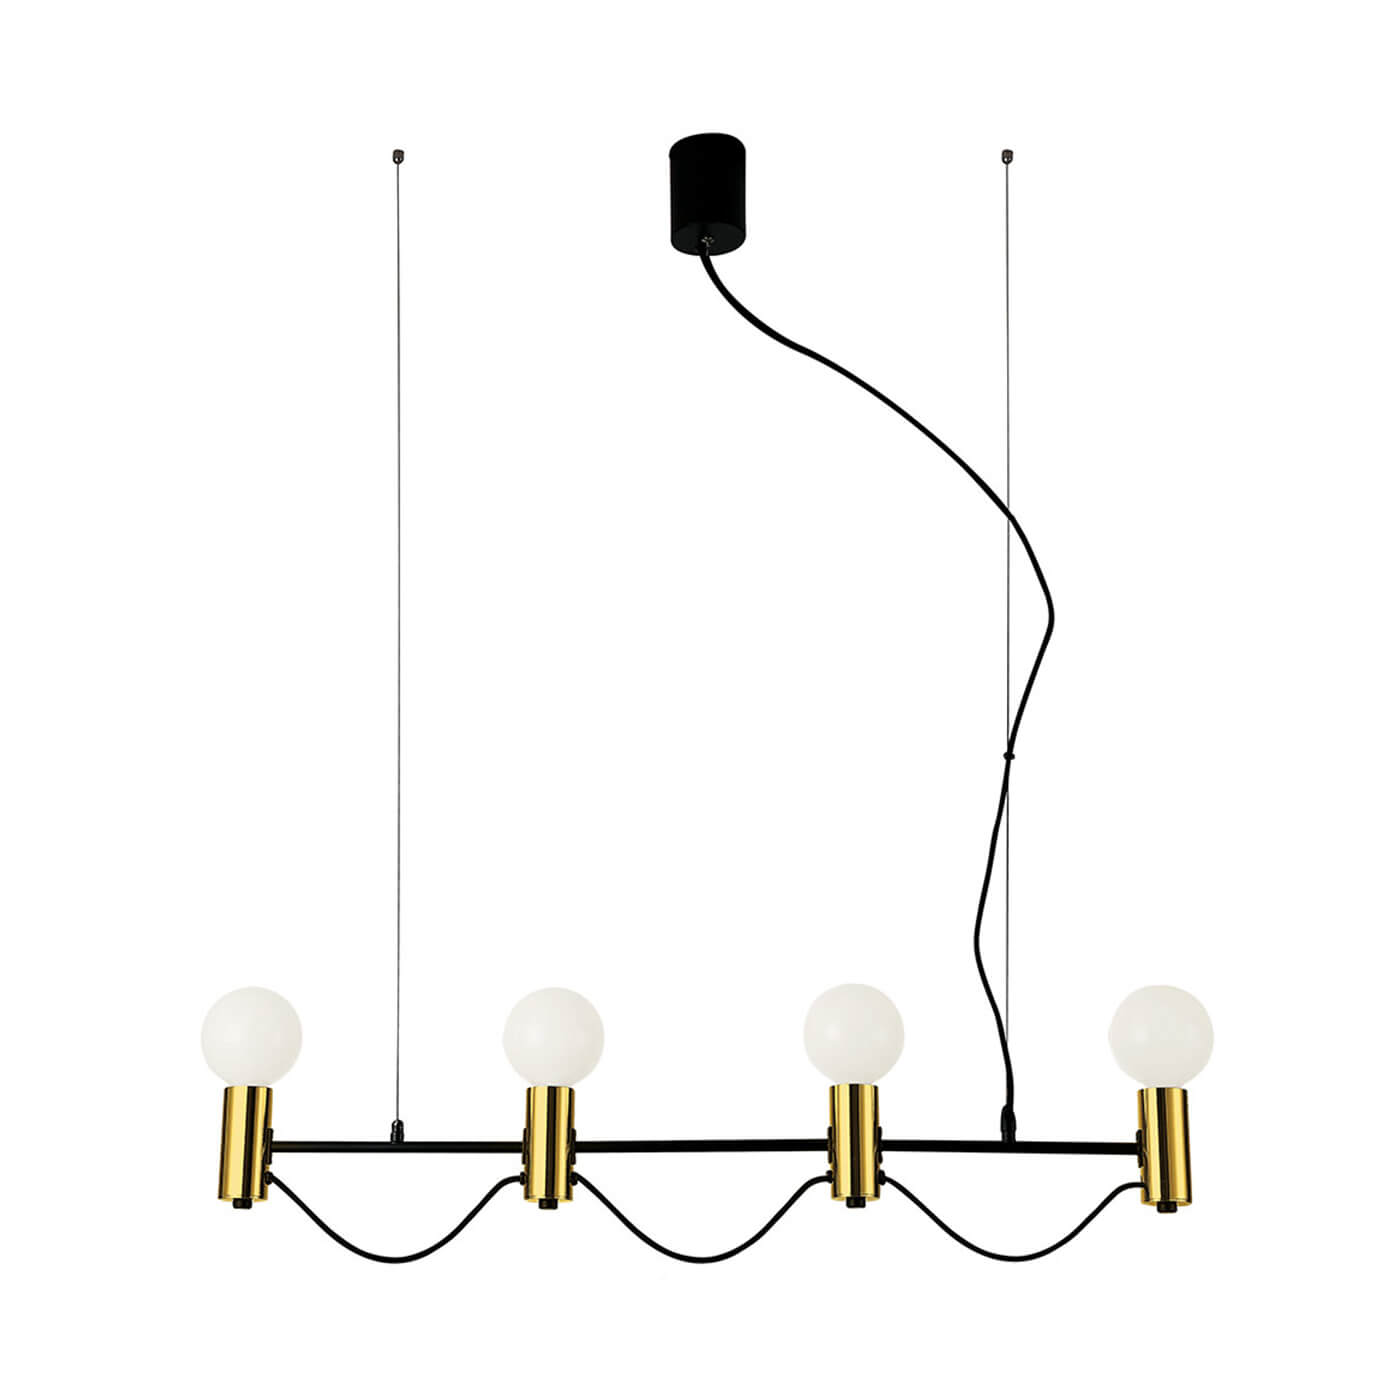 Cauti o lampa suspendata VOLTER S4 neagra-aurie, design modern, elegant, pentru living, dining sau dormitor din colectia de lustre si candelabre Domicilio?